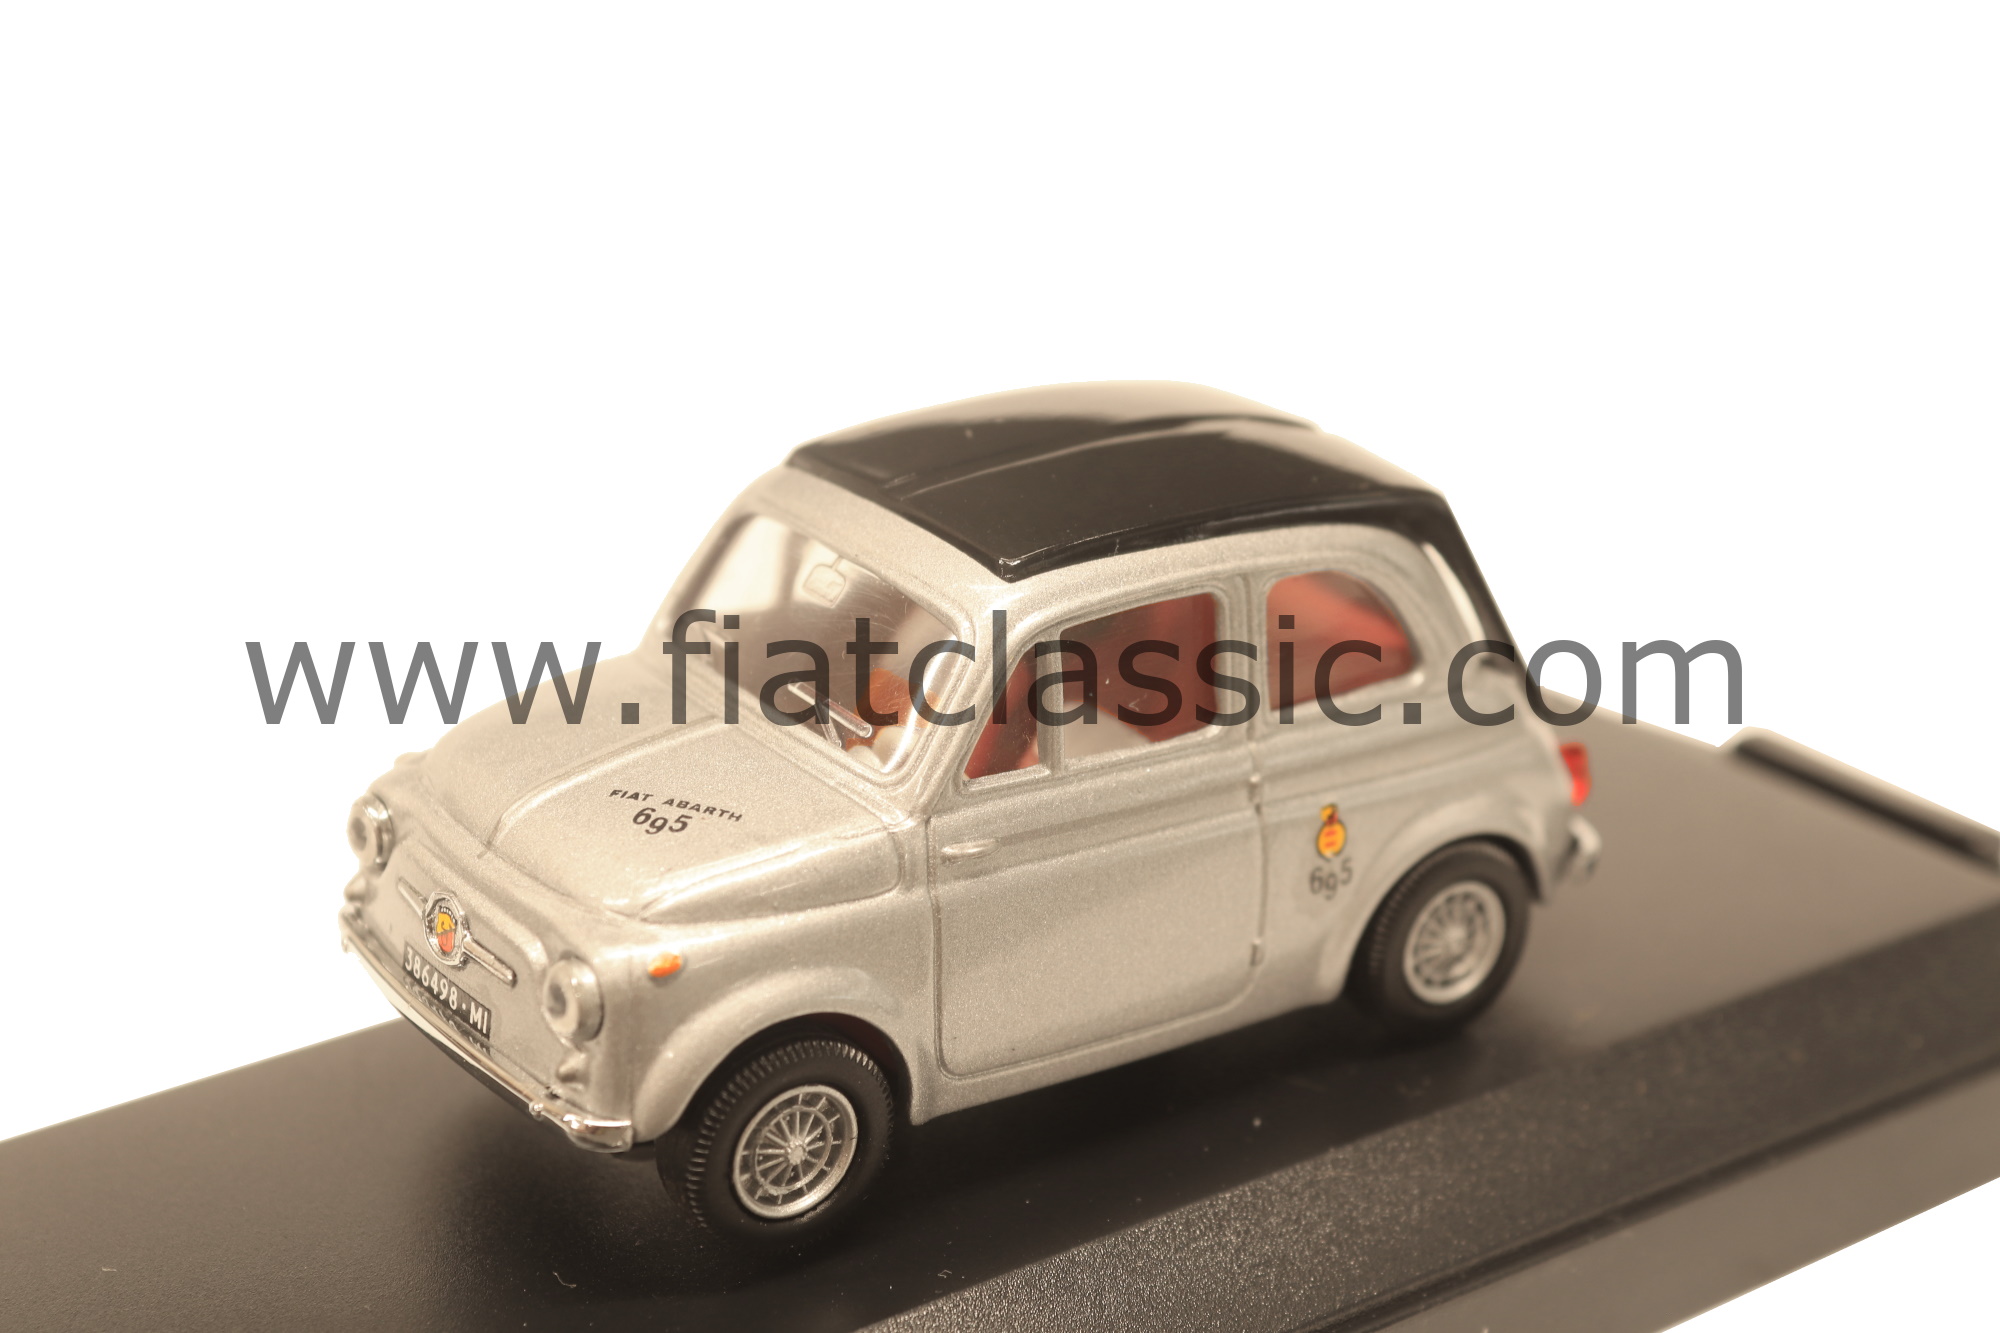 Classic Fiat 500 Rosette Keyring